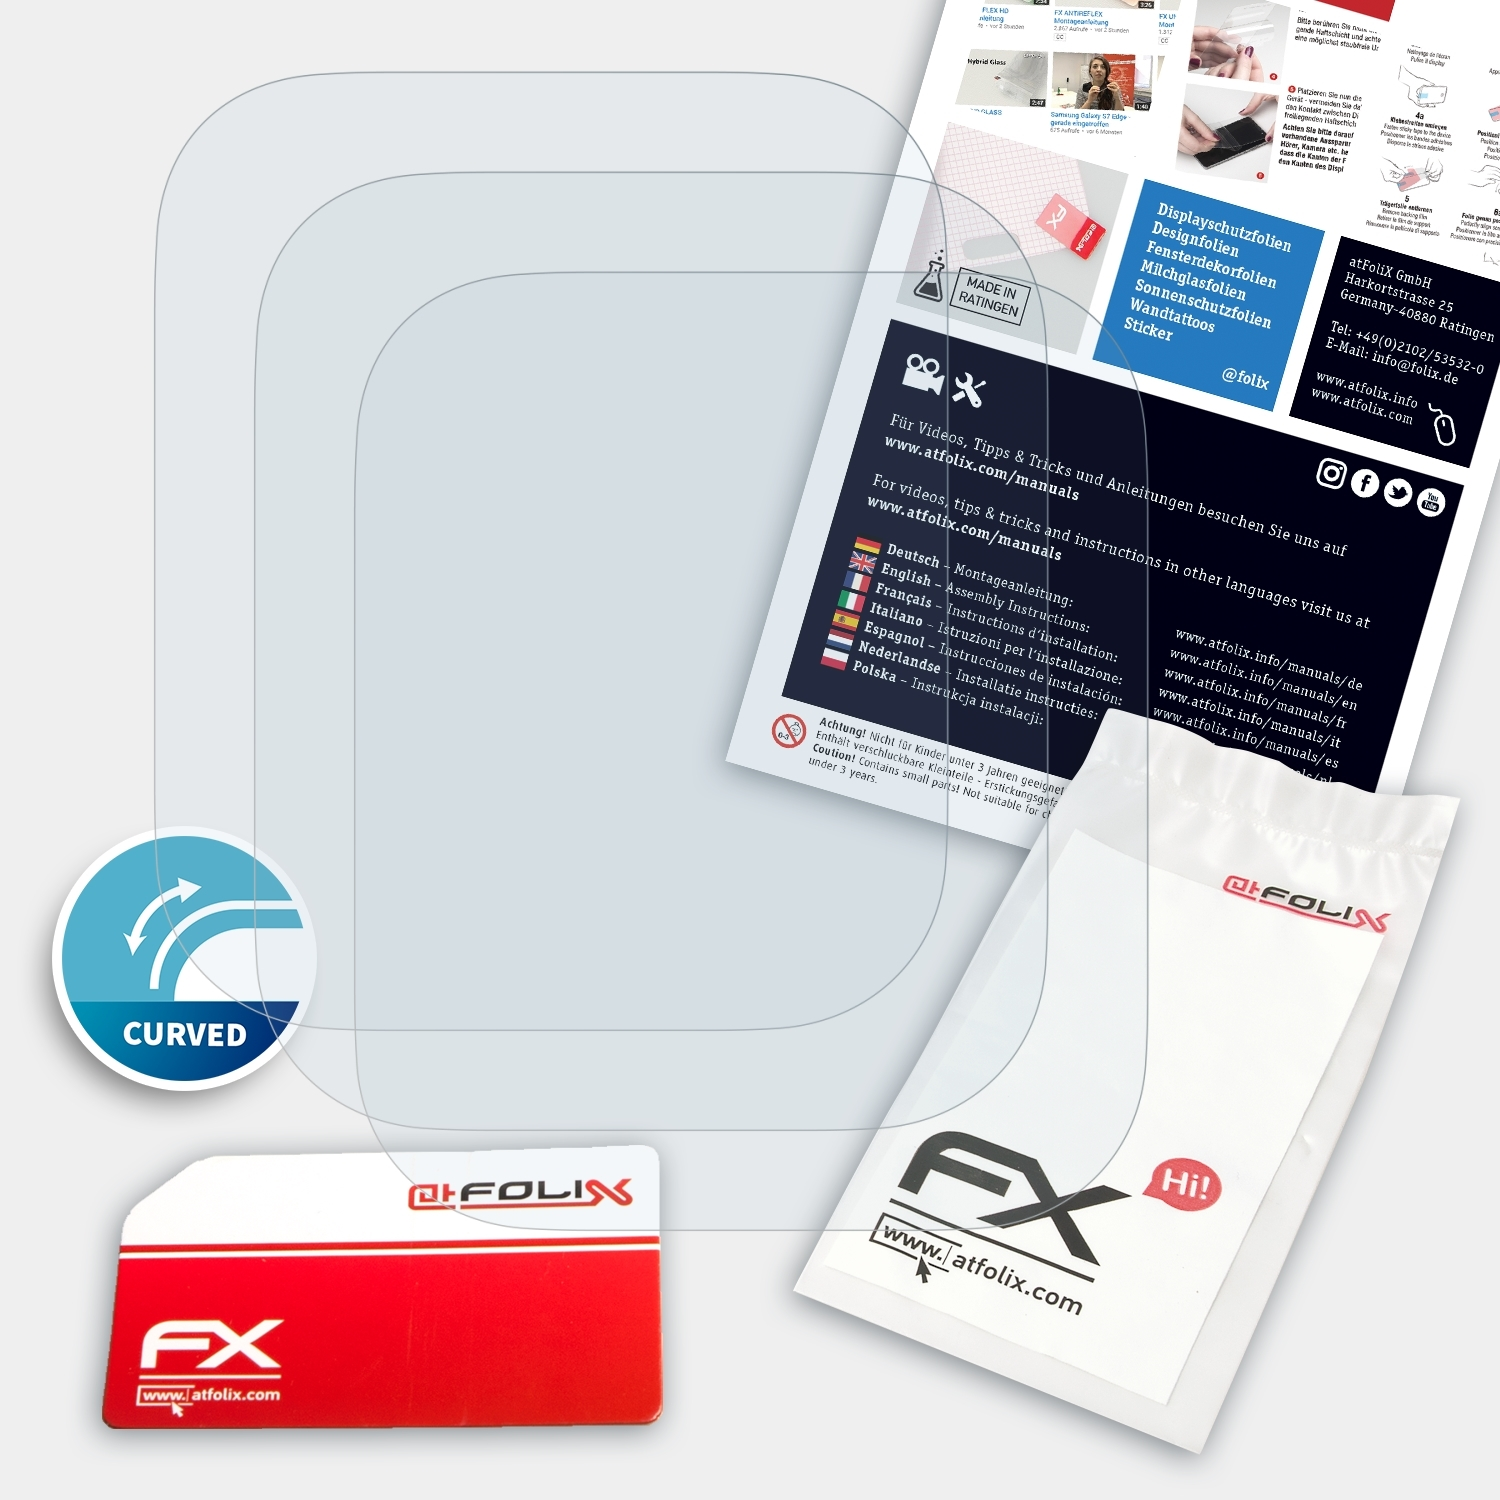 ATFOLIX 3x FX-ActiFleX Pro) Displayschutz(für CS2 DOOGEE